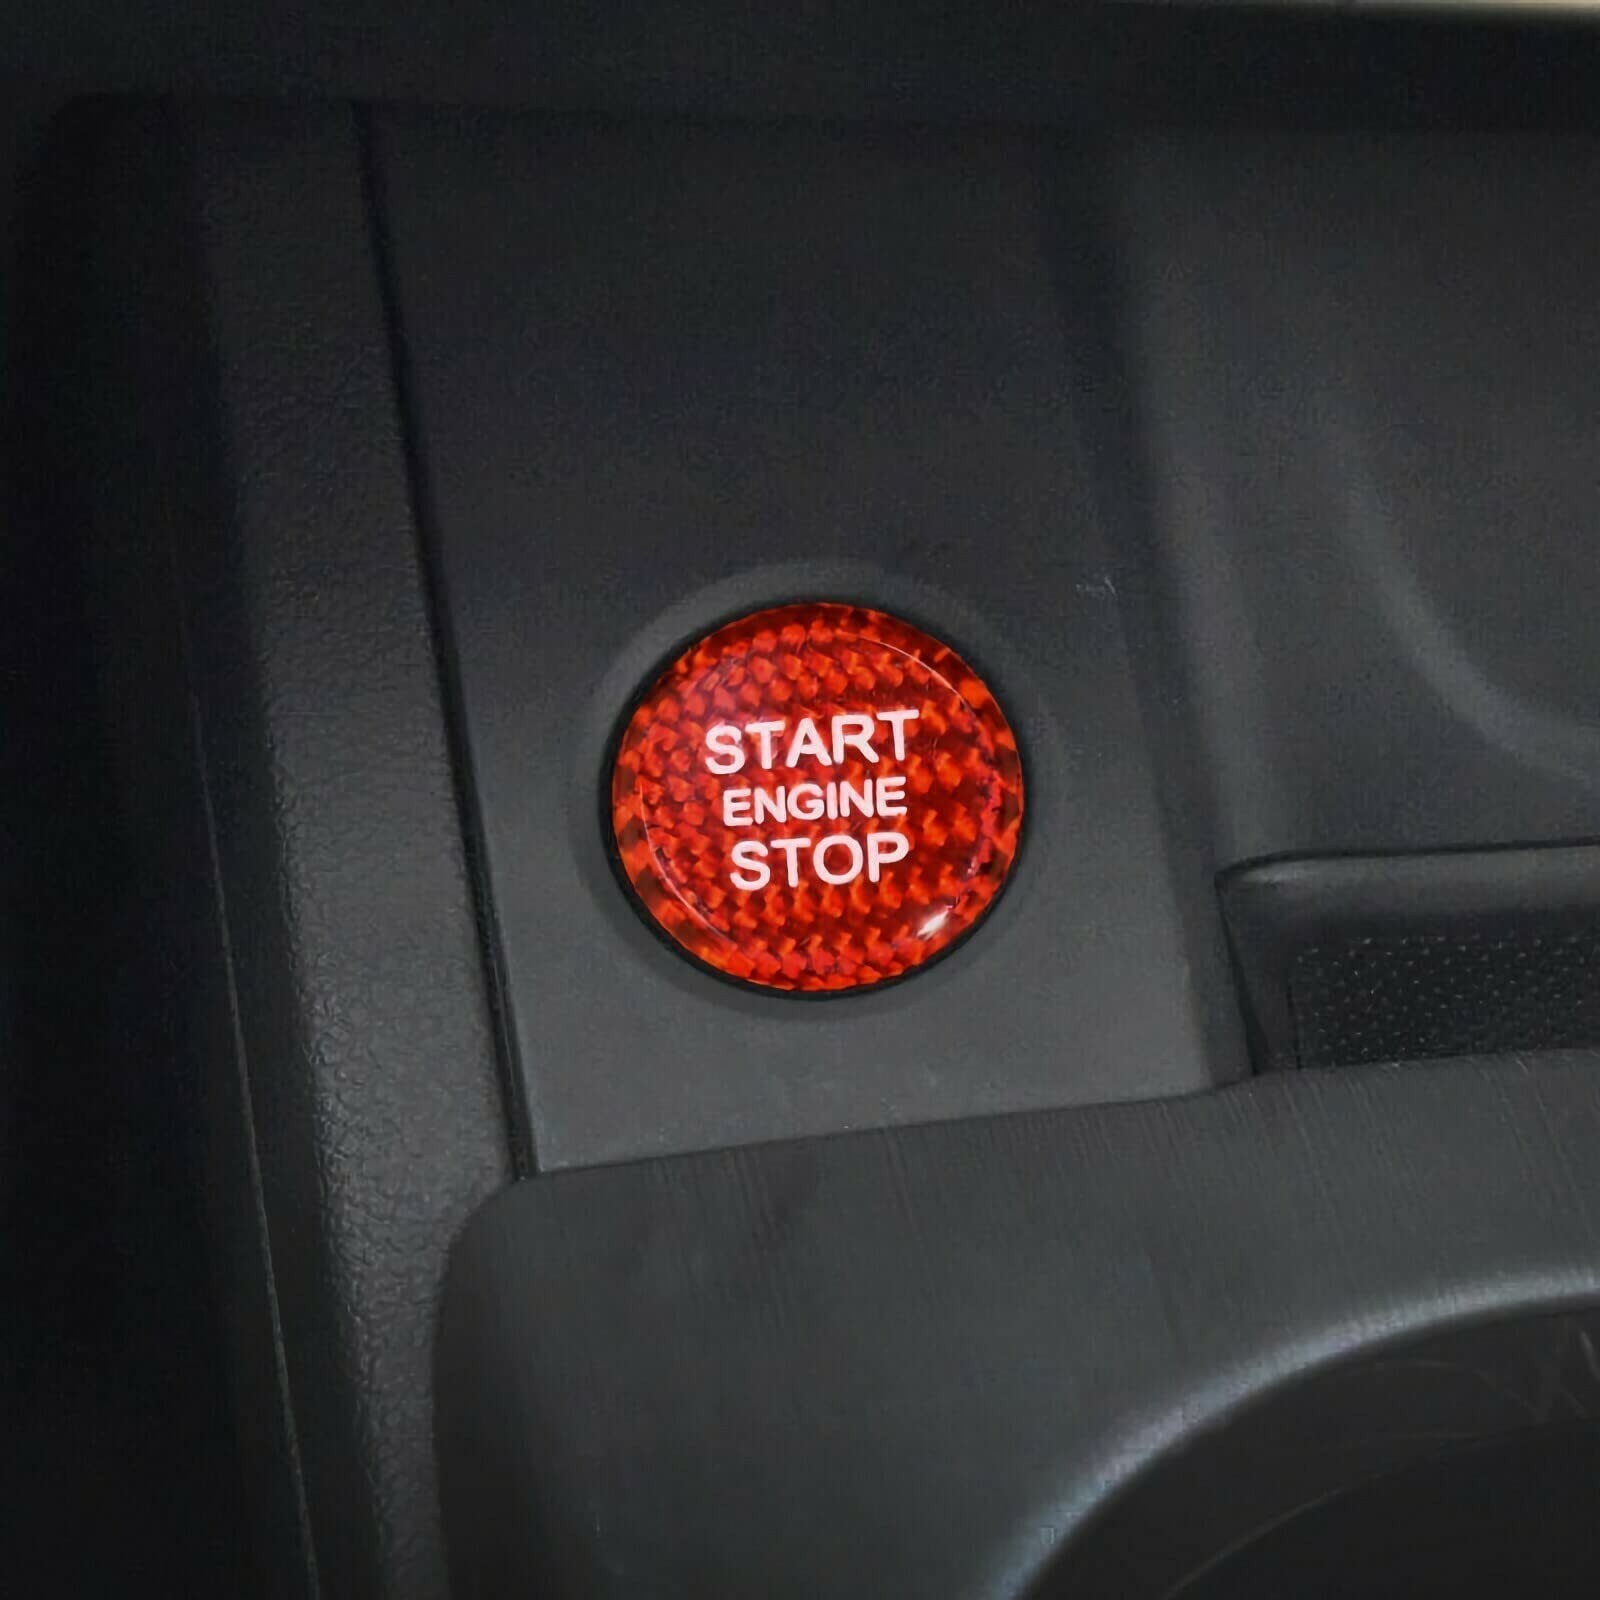 Max Auto Carbon kompatibel mit Audi Rot Carbon Karbon Look Start Stop Knopf Button Cover für A4 A5 A6 A7 S4 S5 S6 Q3 RS Q3 Q5 Q7 von Max Auto Carbon